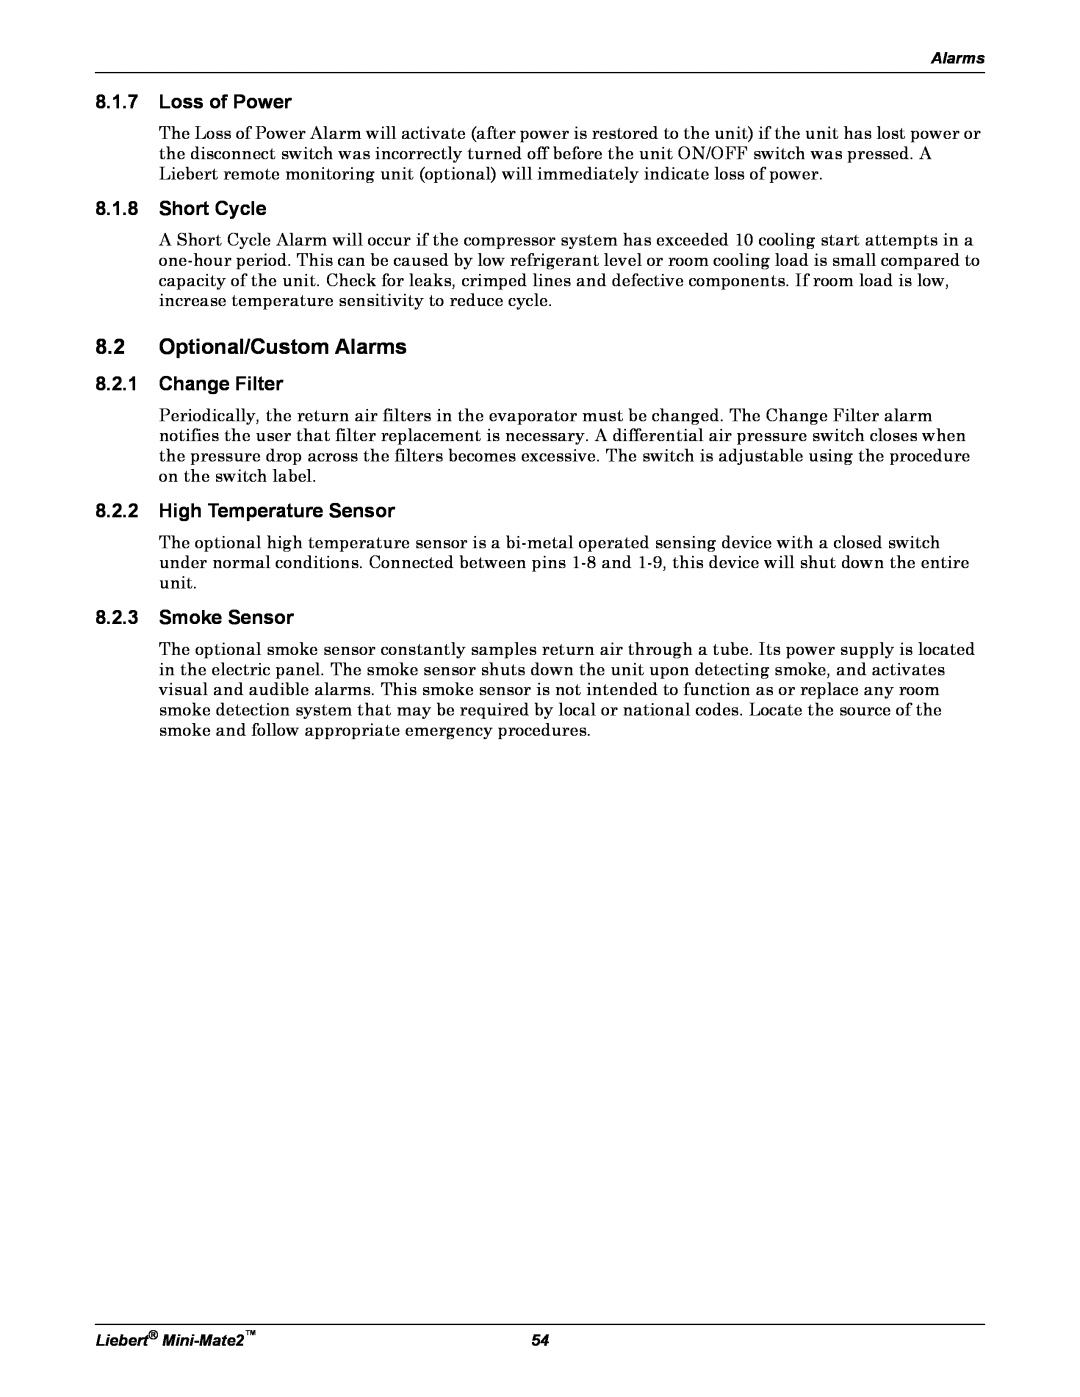 Emerson MINI-MATE2 user manual 8.1.7Loss of Power, 8.1.8Short Cycle, 8.2.1Change Filter, 8.2.2High Temperature Sensor 